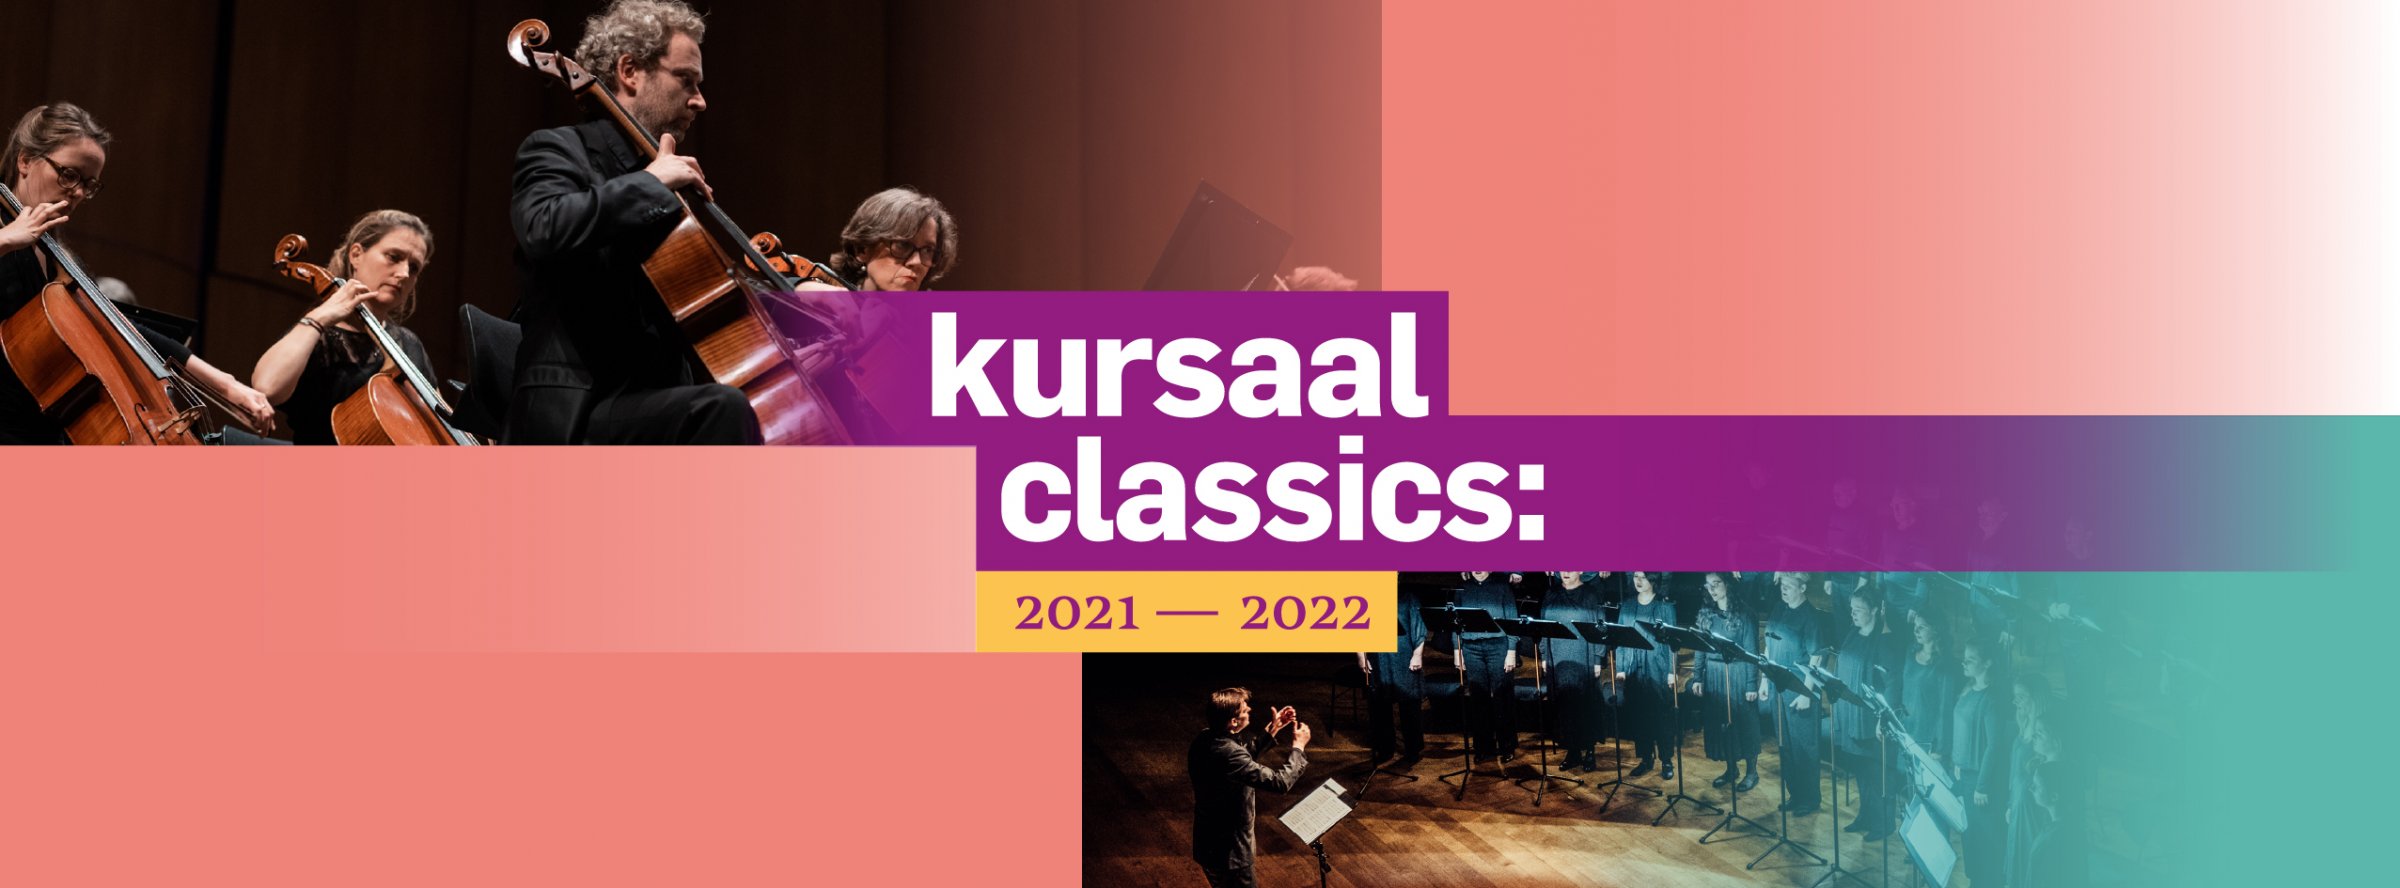 kursaal_classics